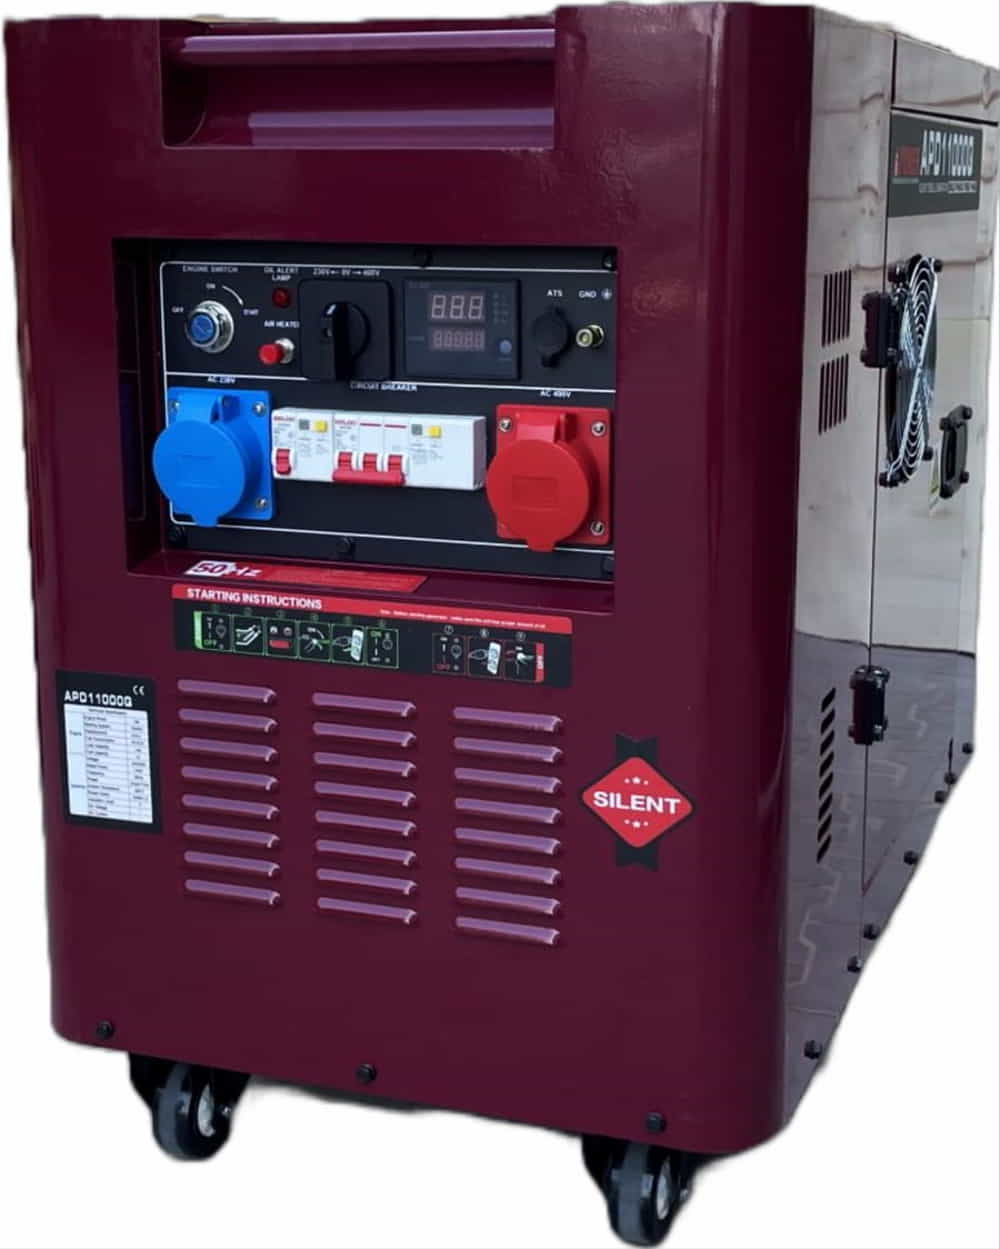 Ai-POWER 9 kVA Diesel APD11000Q Edition 230&400V